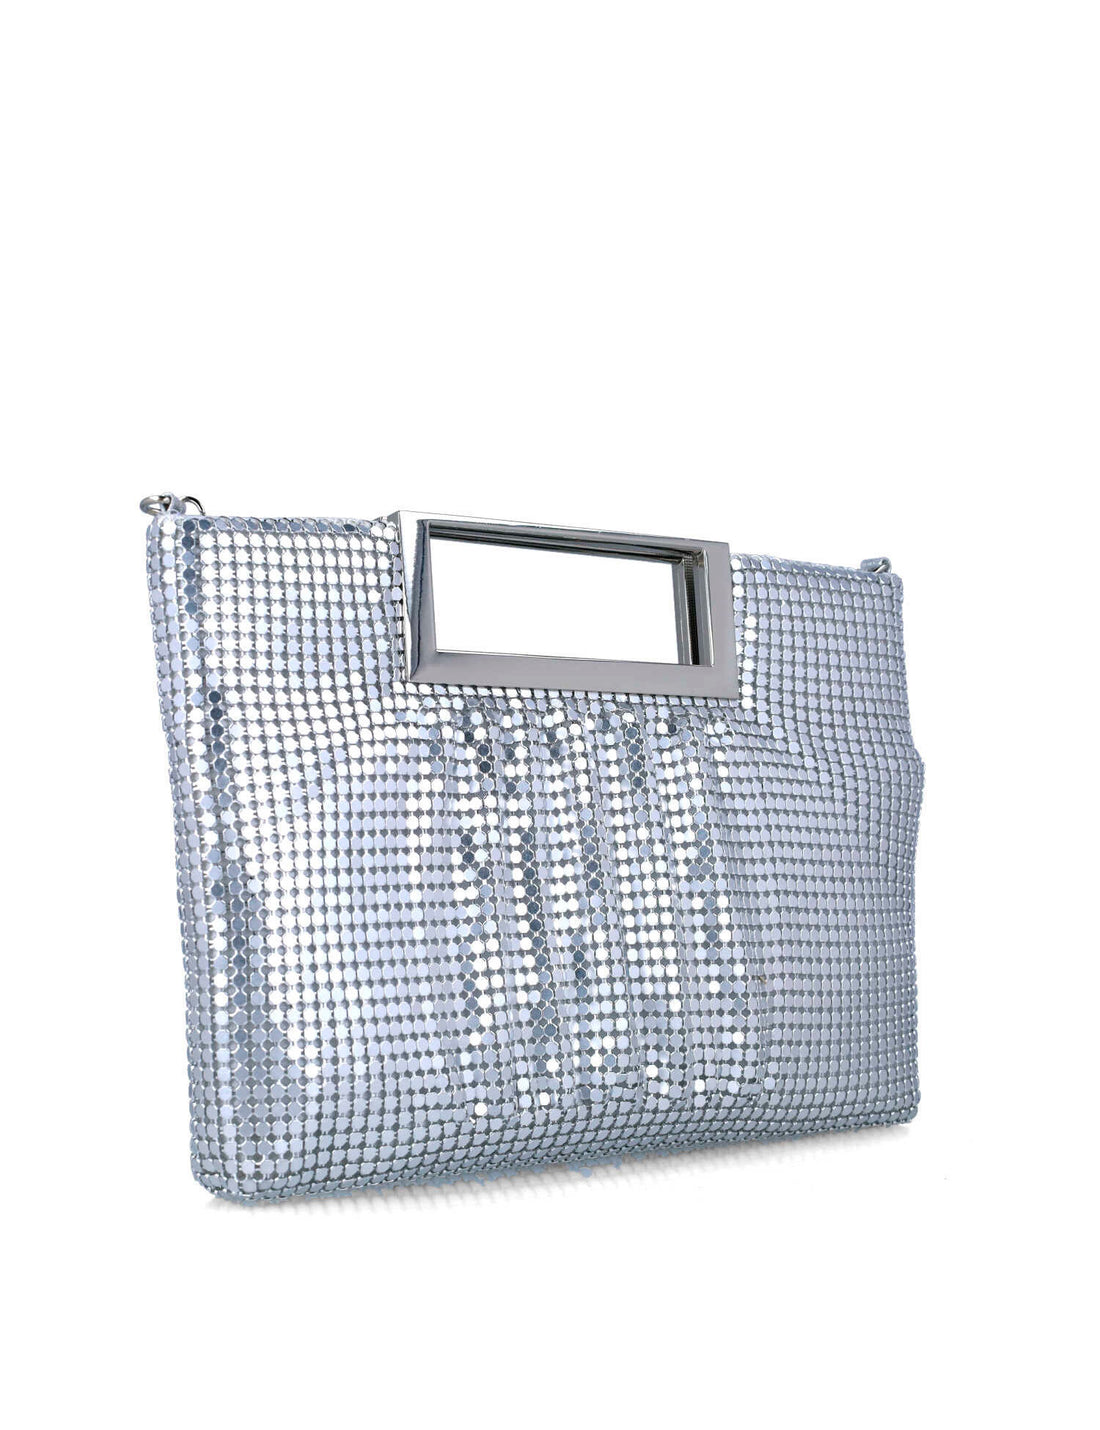 Silver Puffy Handbag With Metallic Handle_85560_09_02